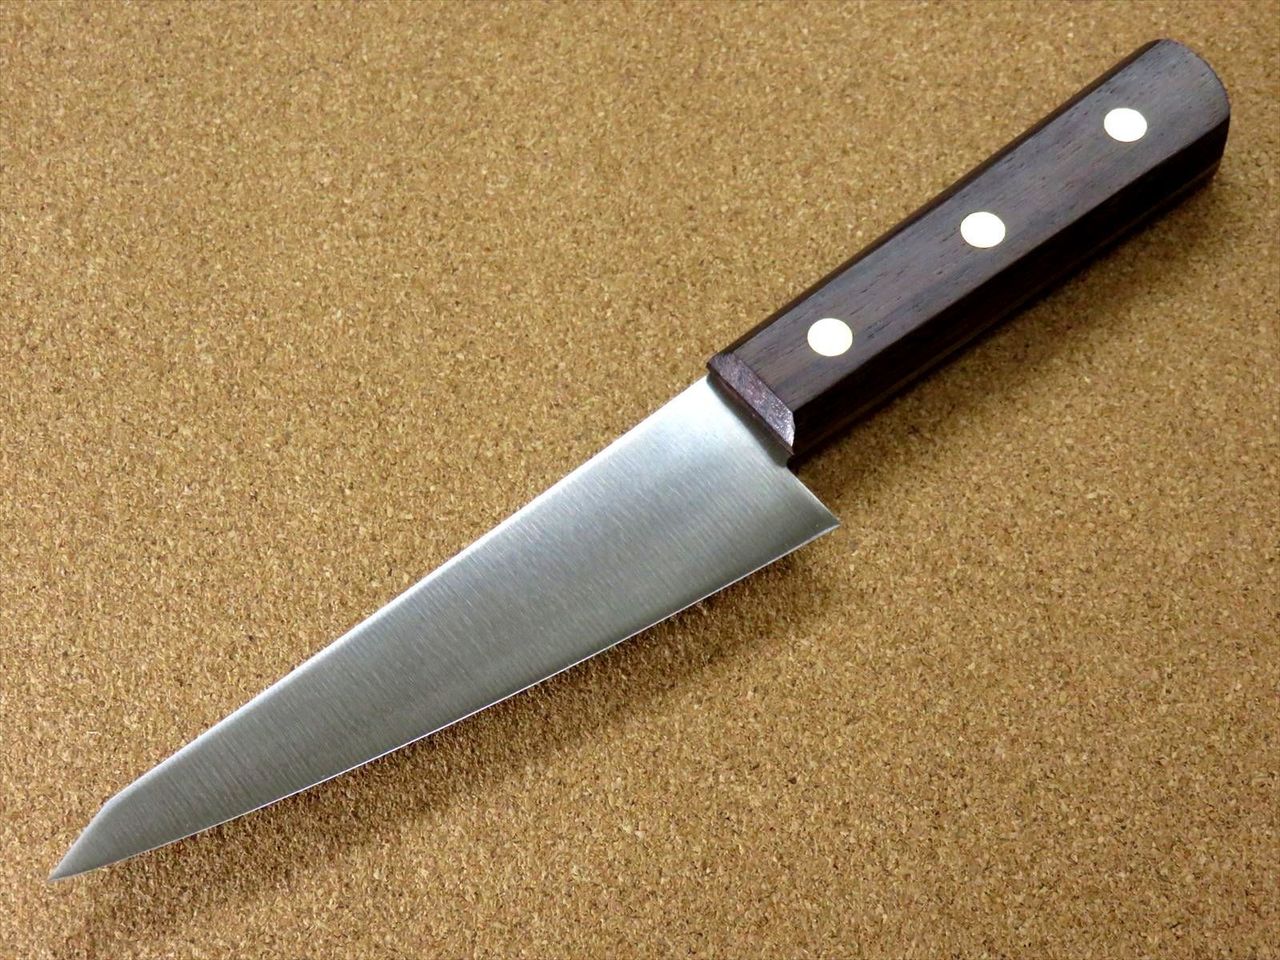 Hagane Masahiro Kitchen Santoku Knife 6.7 Molybdenum Carbon Steel